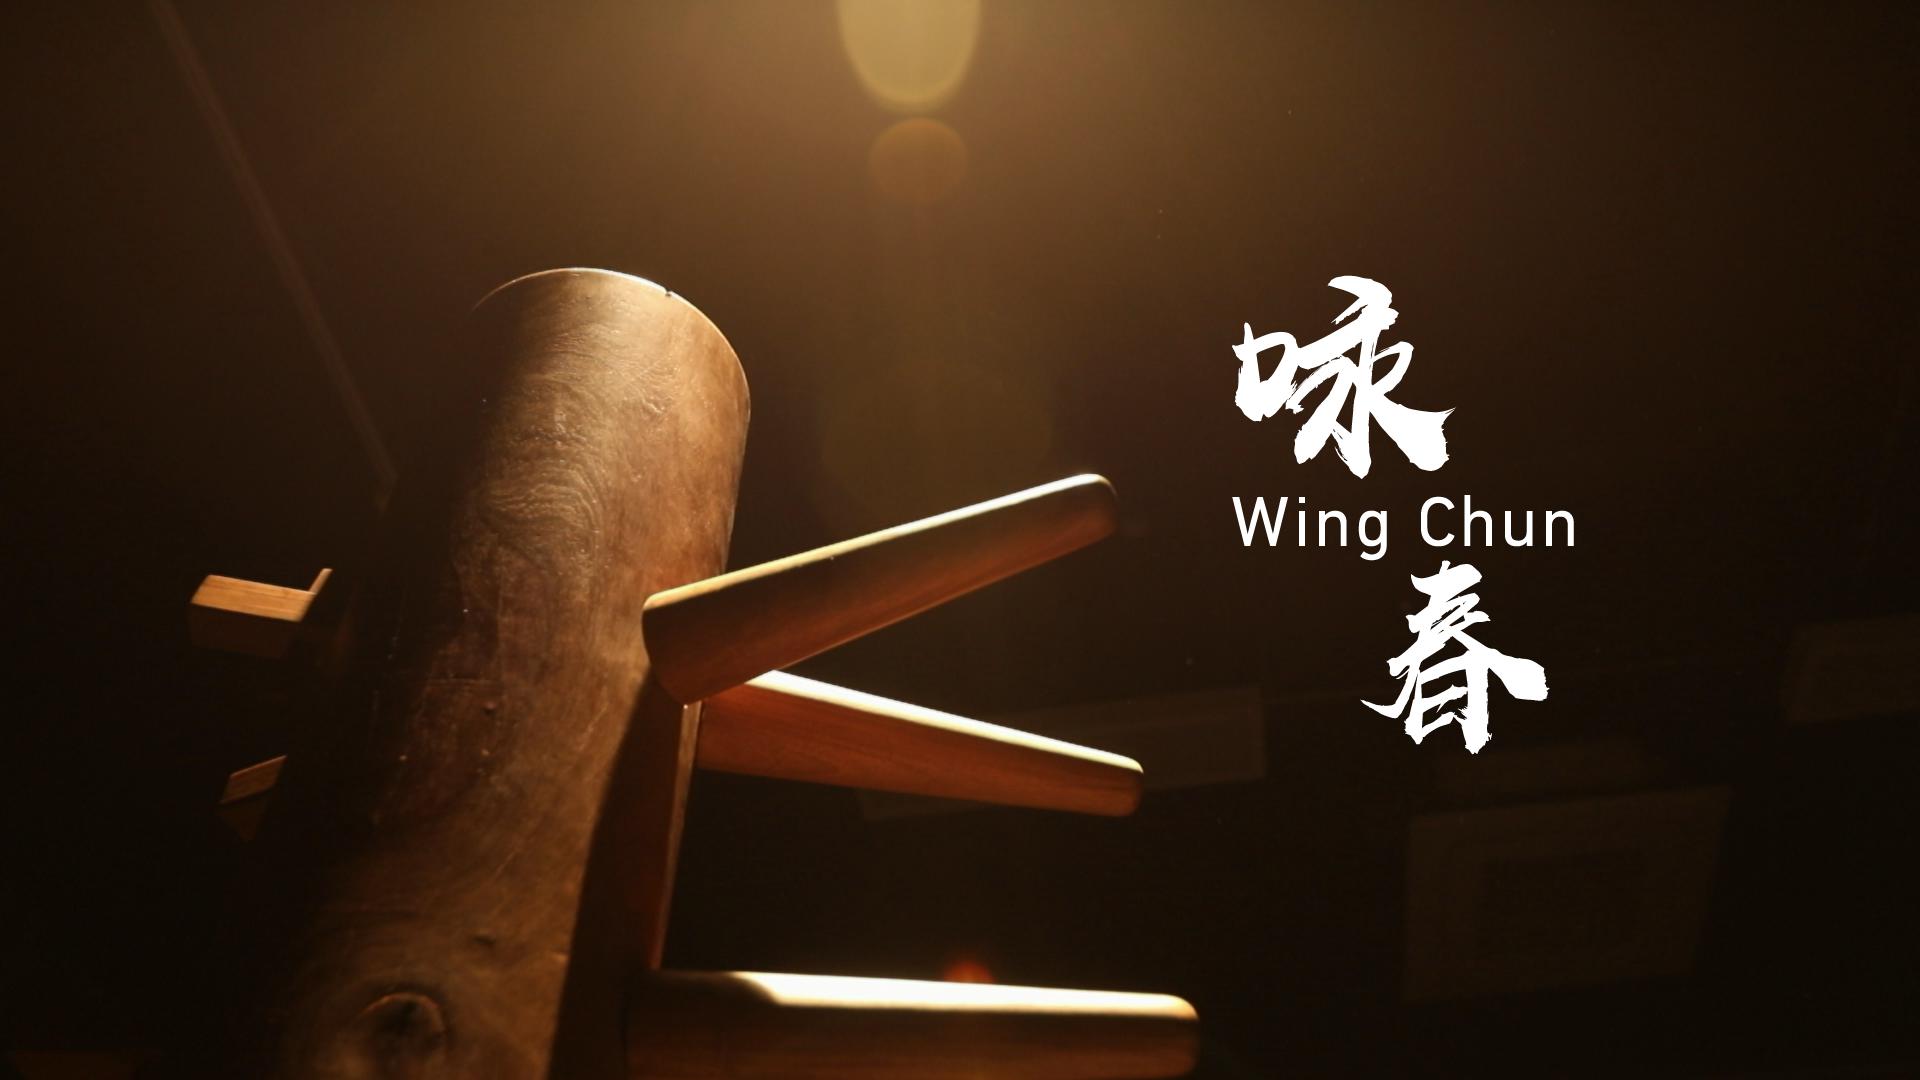 Donnie Yen on Wing Chun